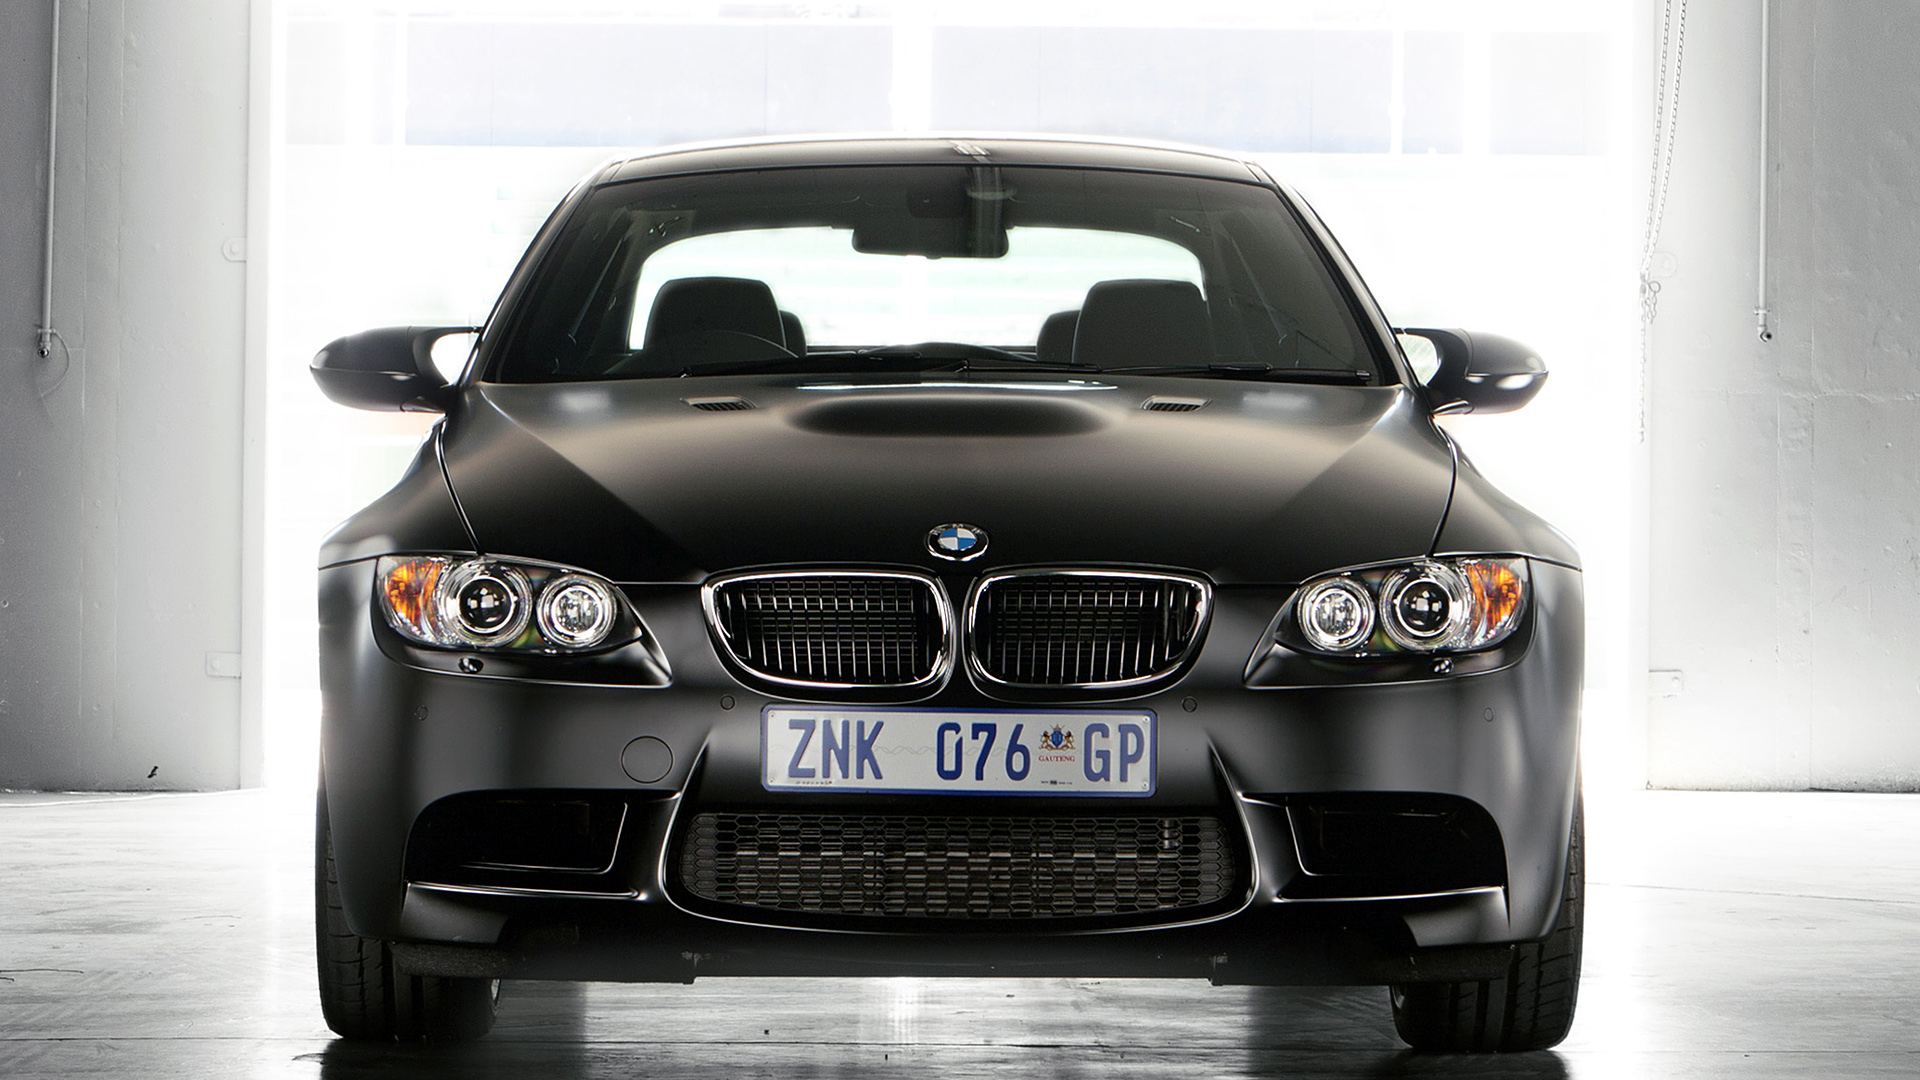  2013 BMW M3 Frozen Edition Wallpaper.